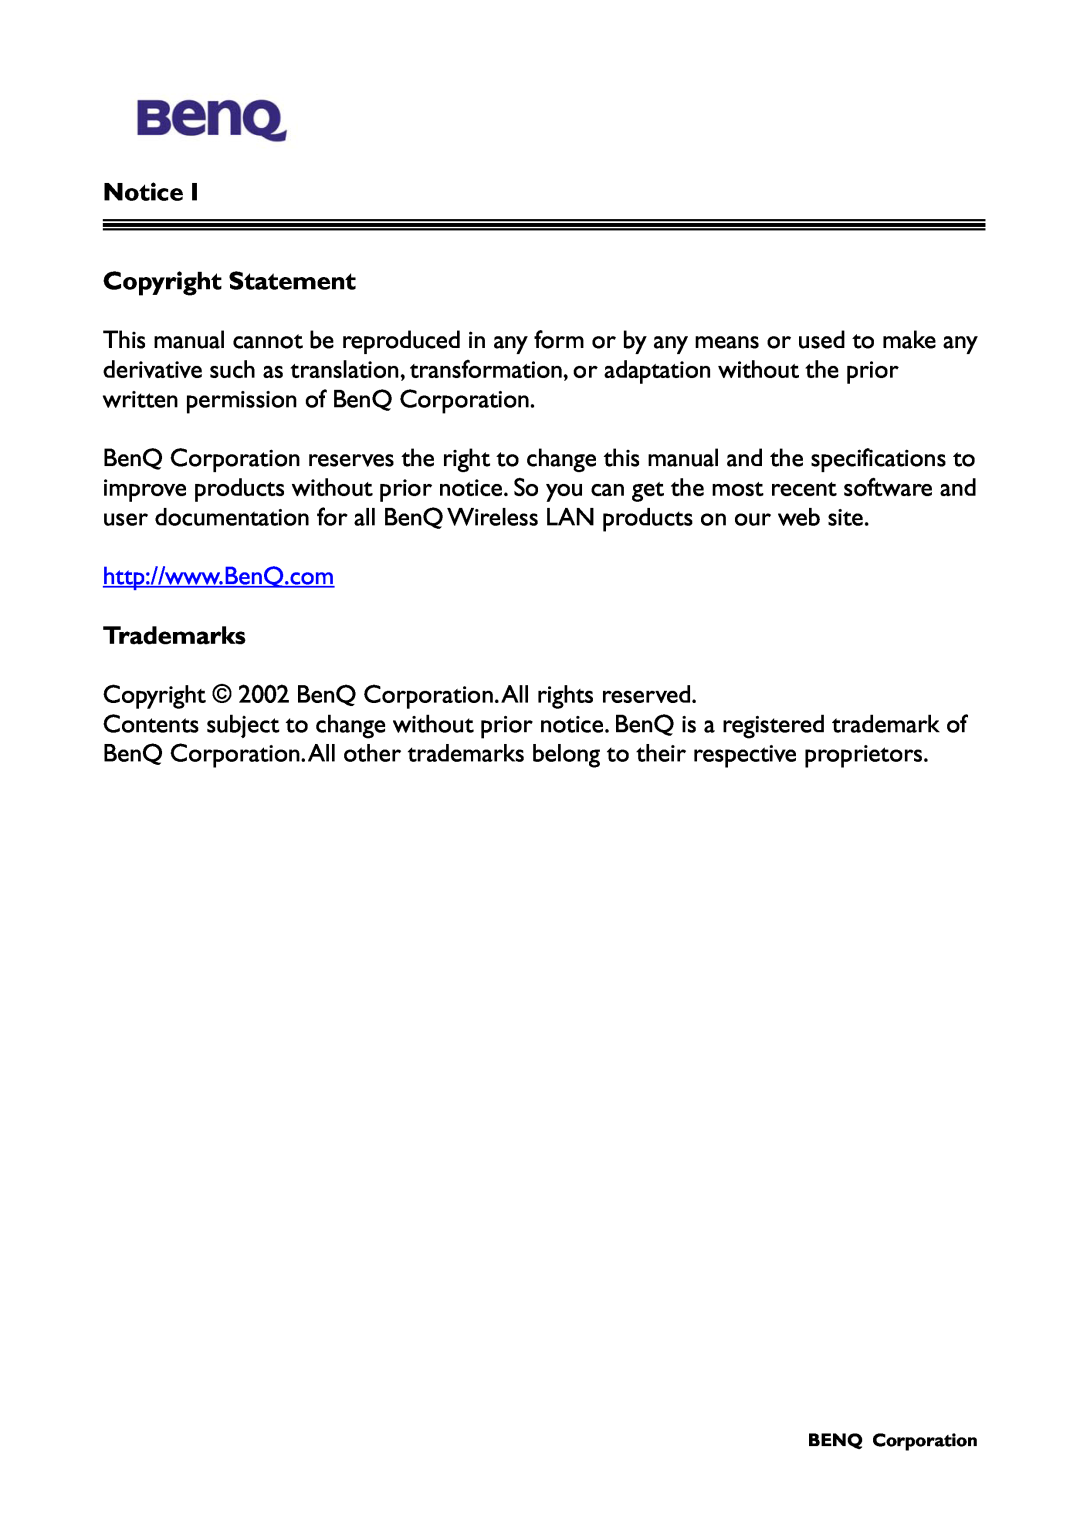 BenQ AWL-500 user manual Copyright Statement, Trademarks 